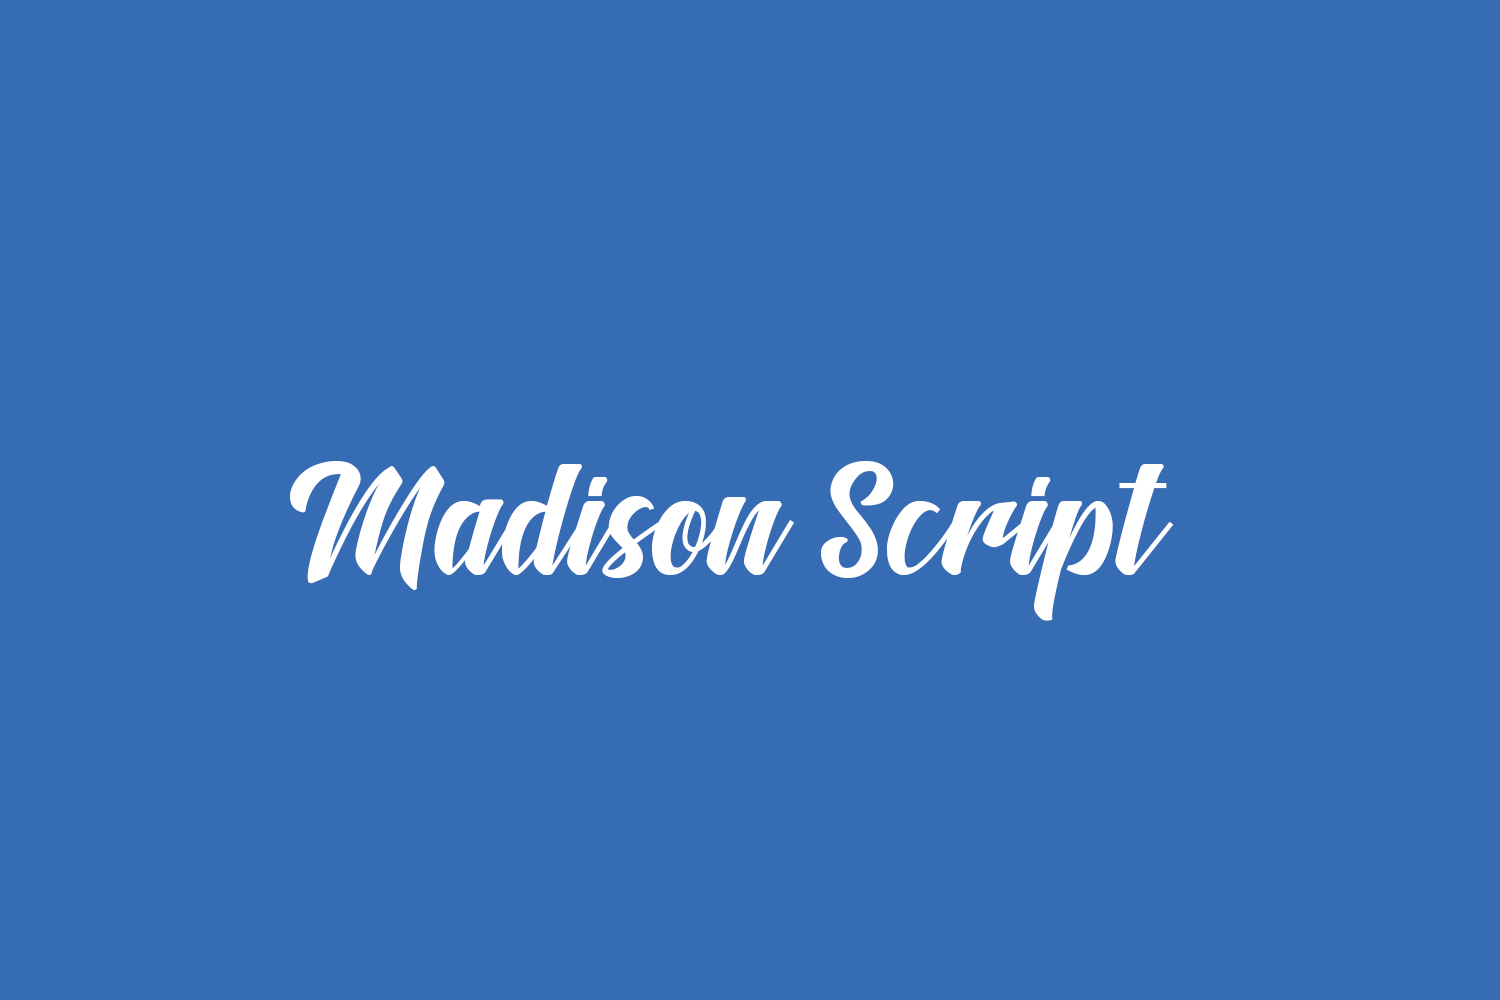 Madison Script Free Font